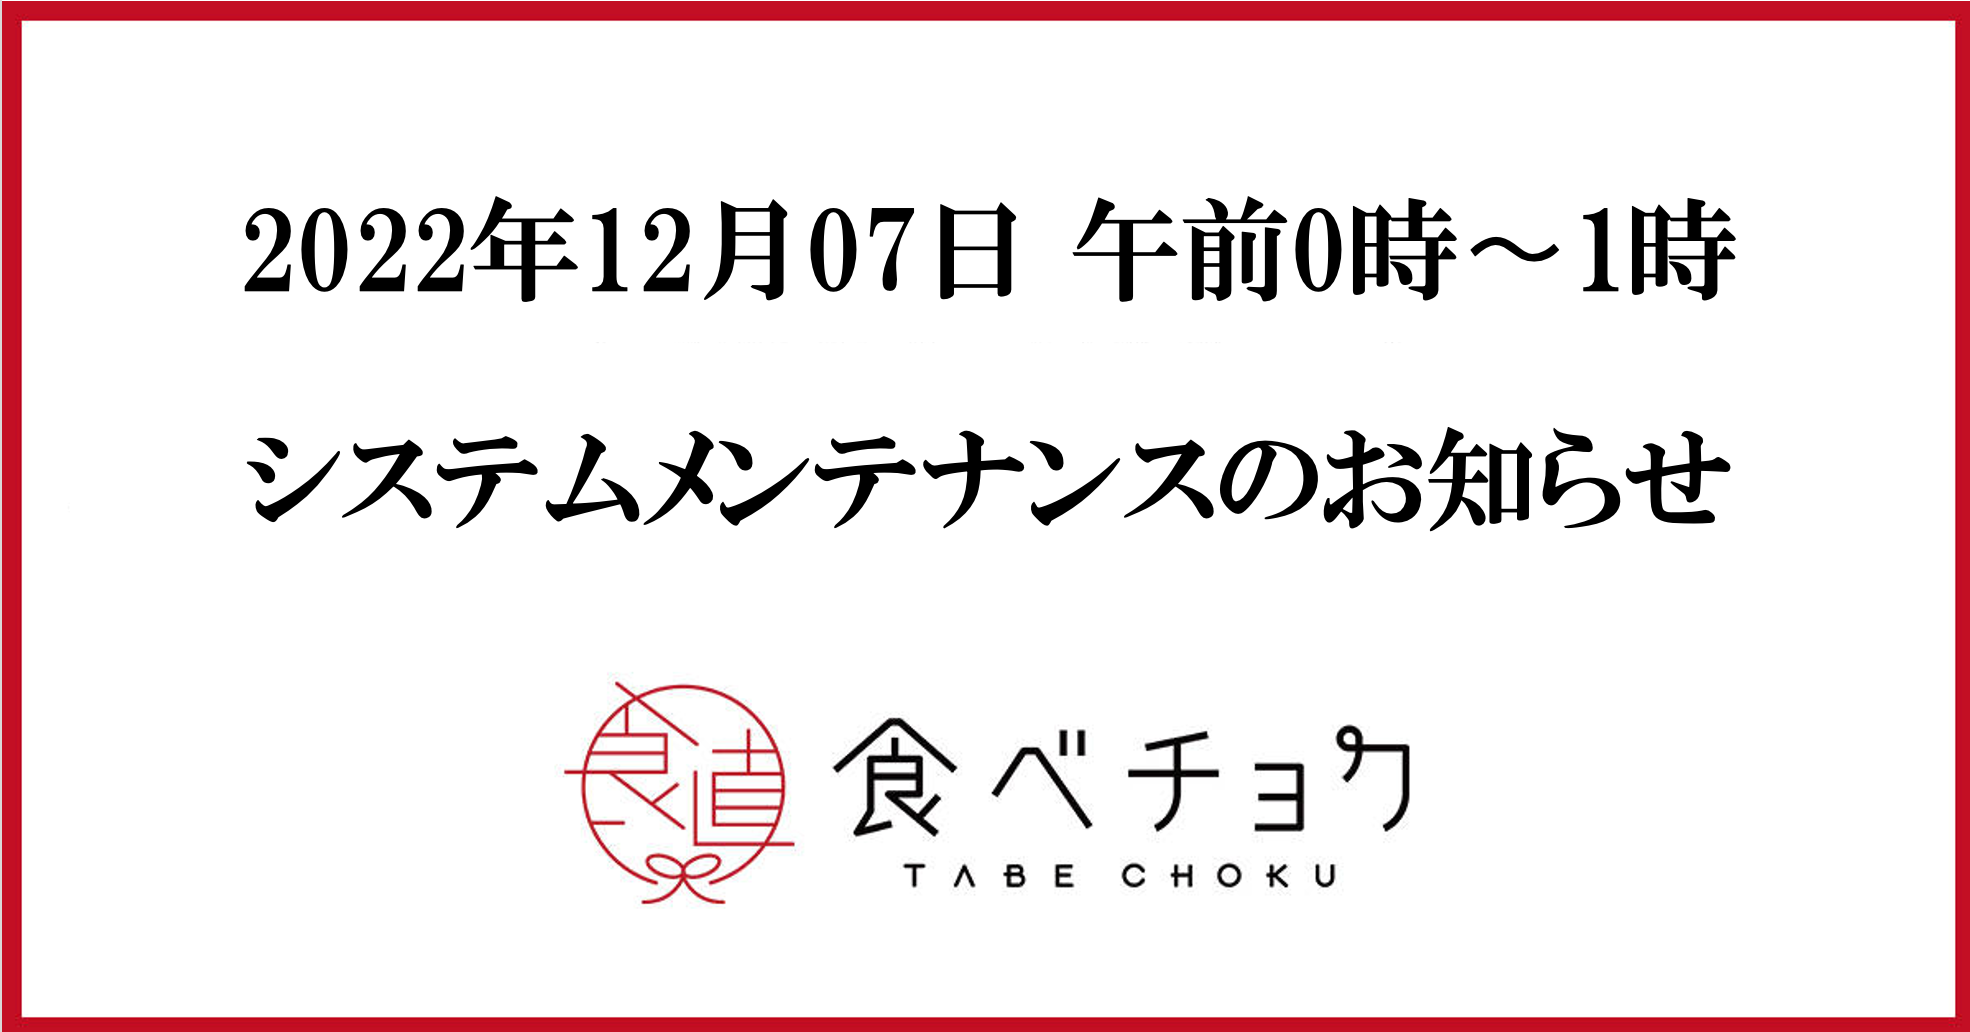 🍴 Eat choku | System maintenance notice December 2022, 12 (Wednesday) 07:0 am to 1:XNUMX am | Eat choku